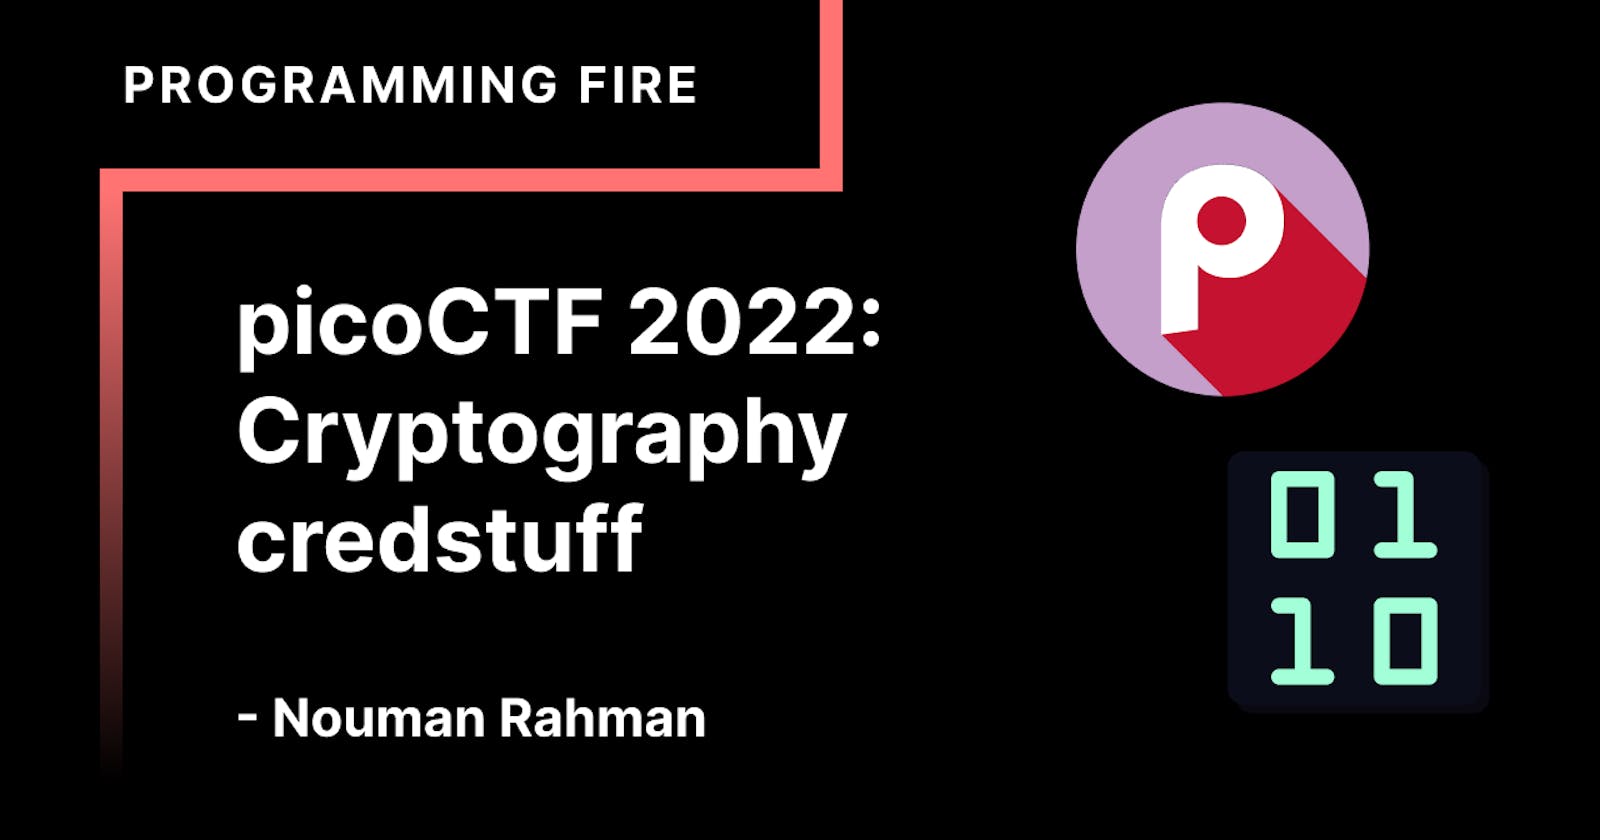 picoCTF 2022: Cryptography: credstuff